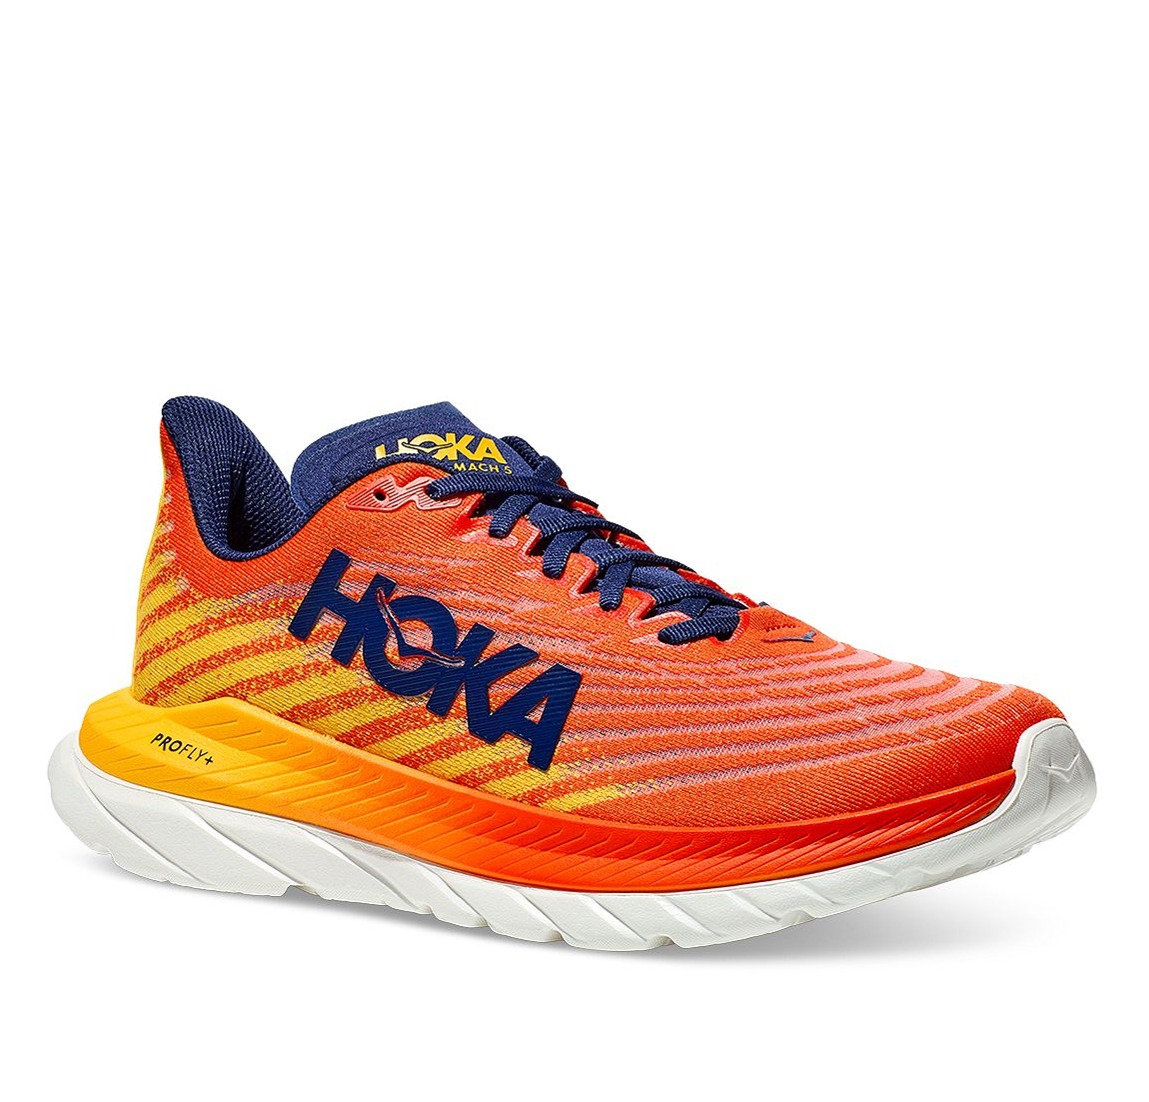 HOKA Men's Mach 5 Low Top Running Sneakers Men - $56